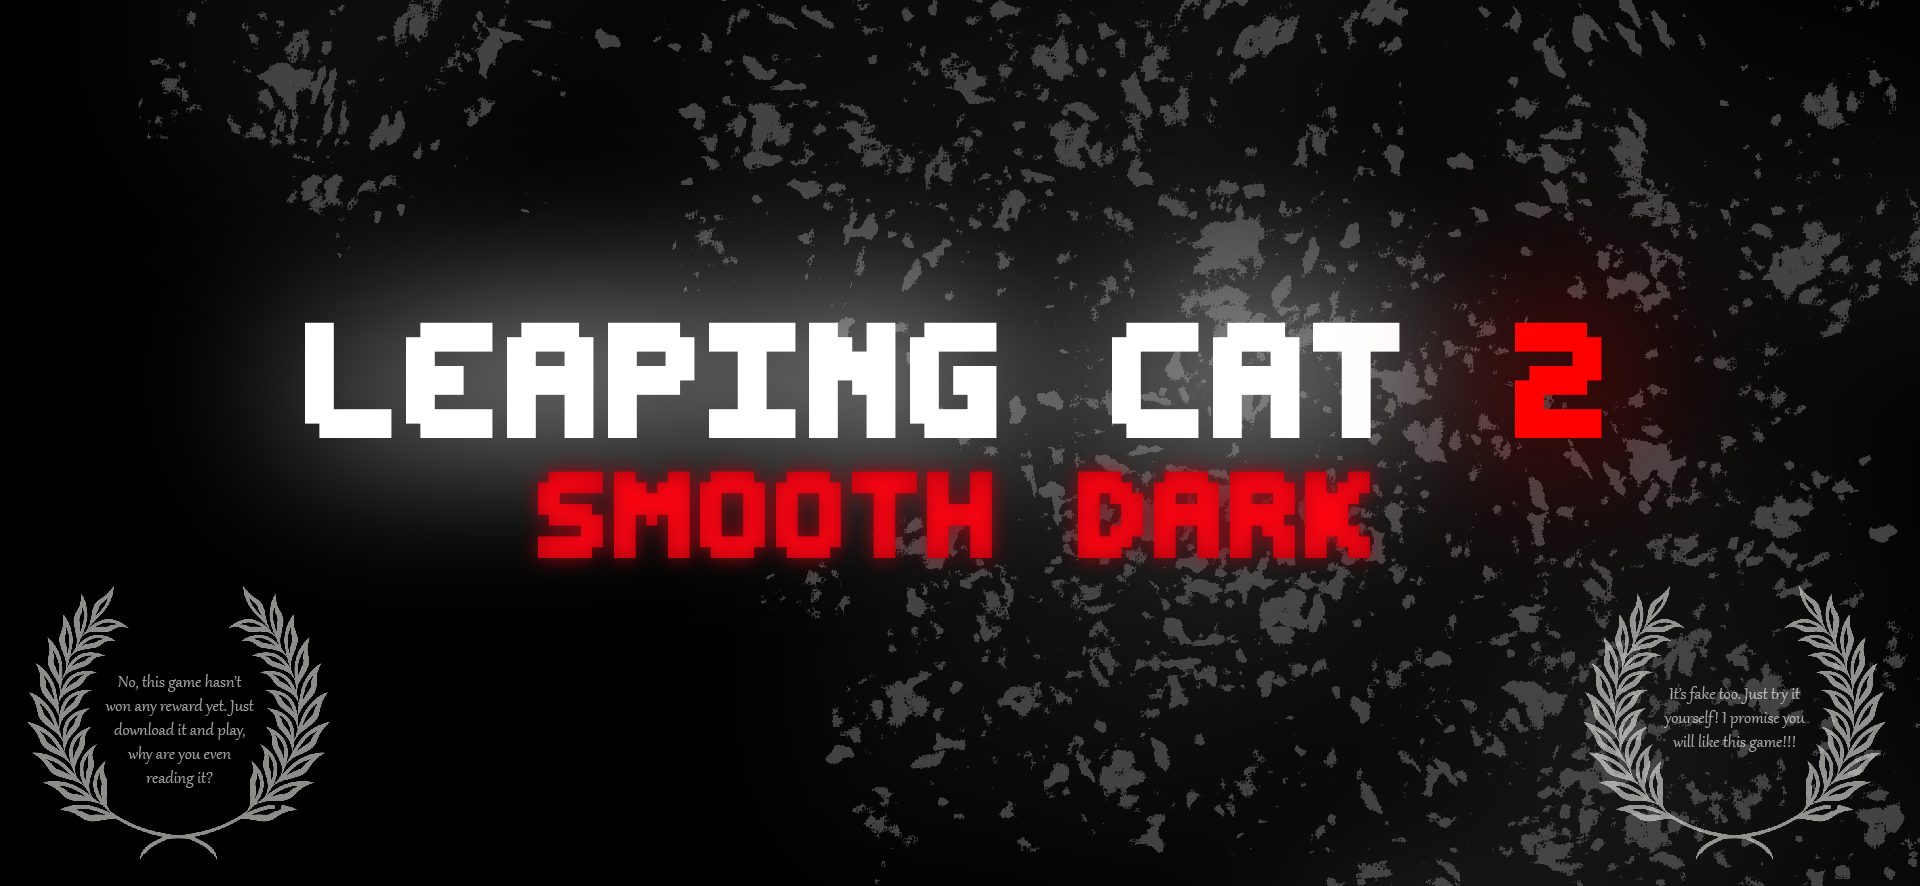 Screenshot 1 of Gato saltando 2 - Suave oscuridad 1.0.0.9